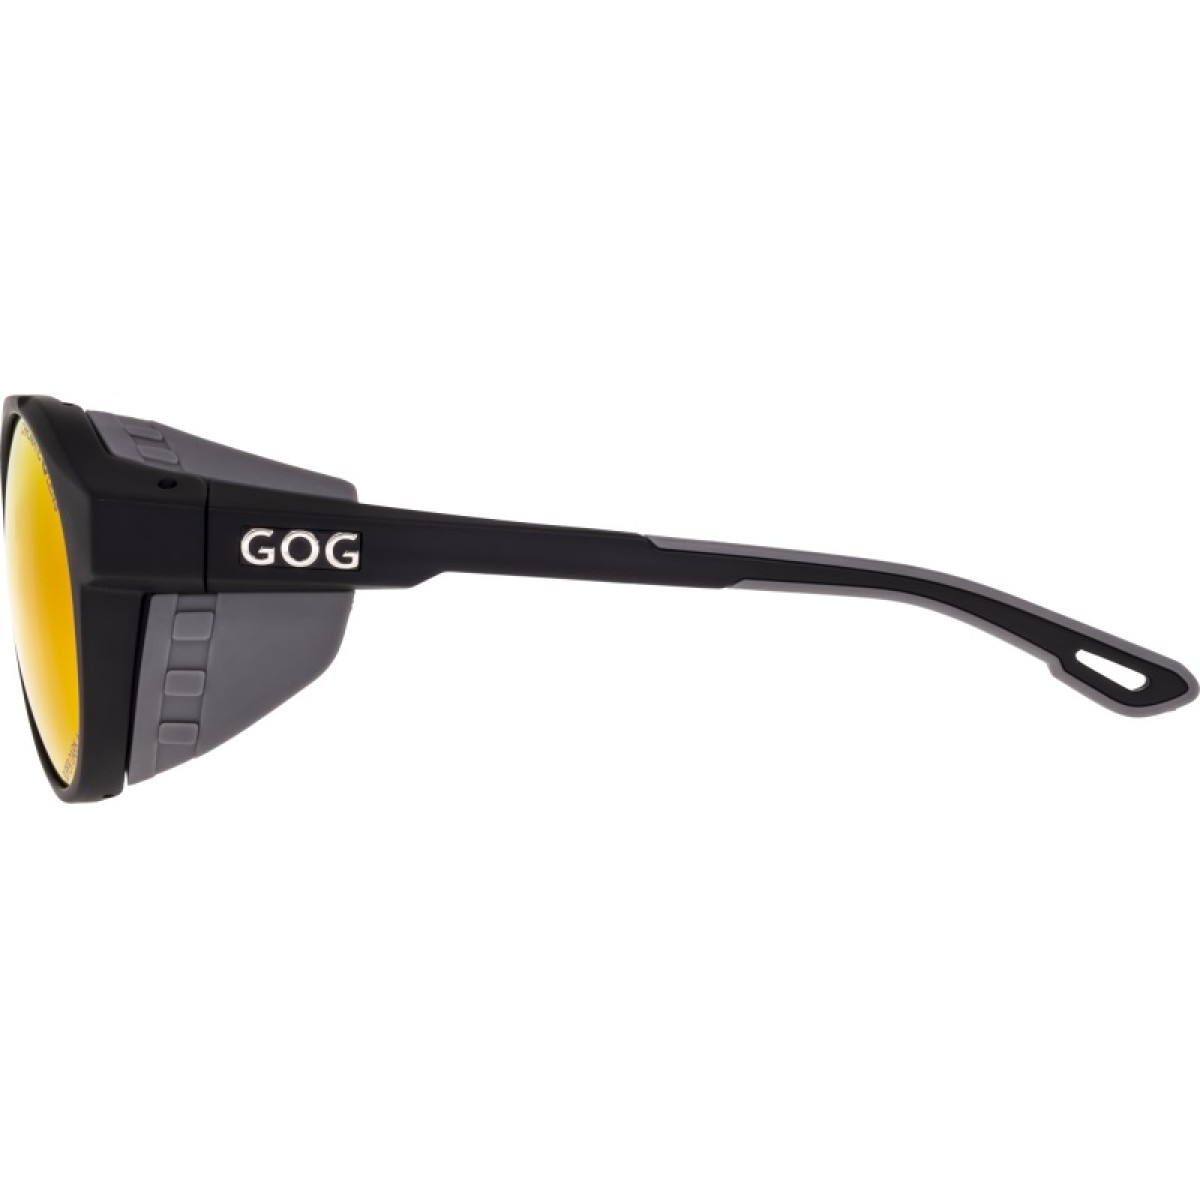 Photochromatic Sunglasses Manaslu E495-2 Black GOG - view 3